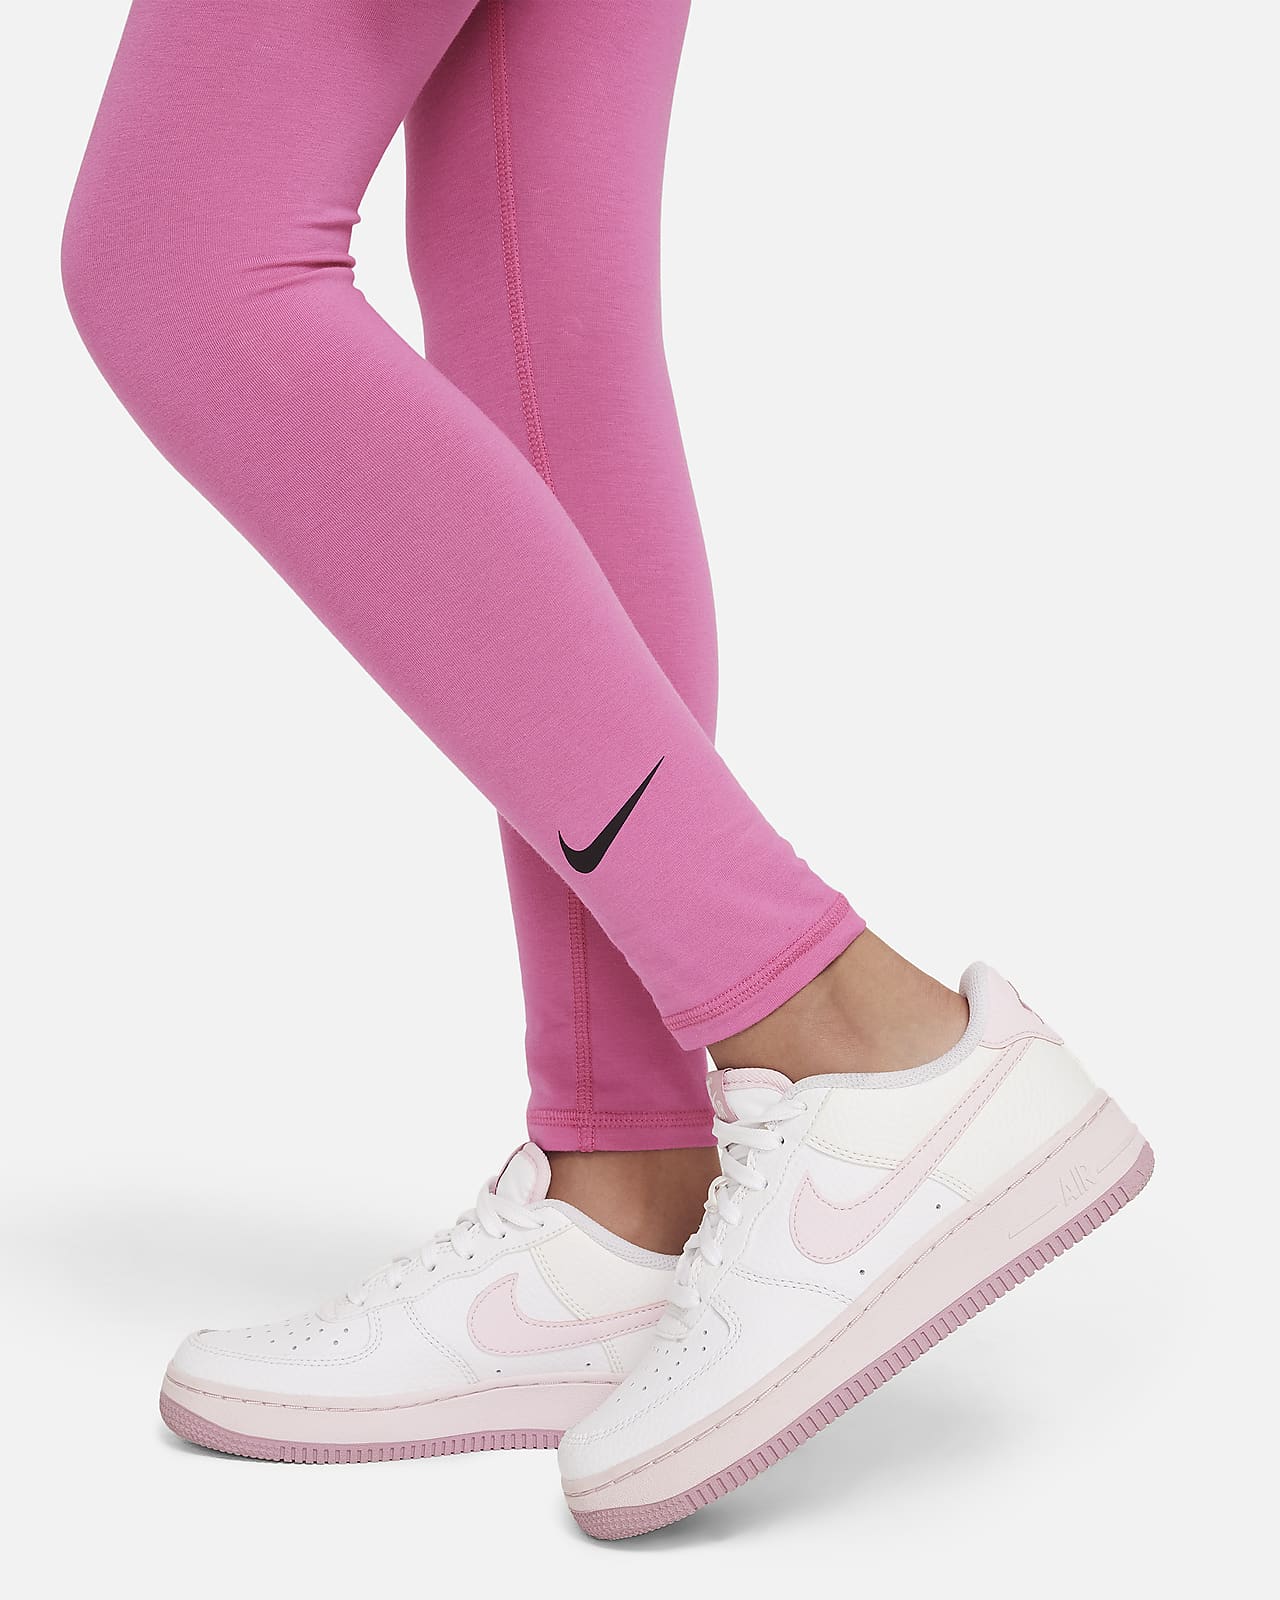 Nike Womens Sportswear Air Tights (Black/Dark Smoke Grey/White)